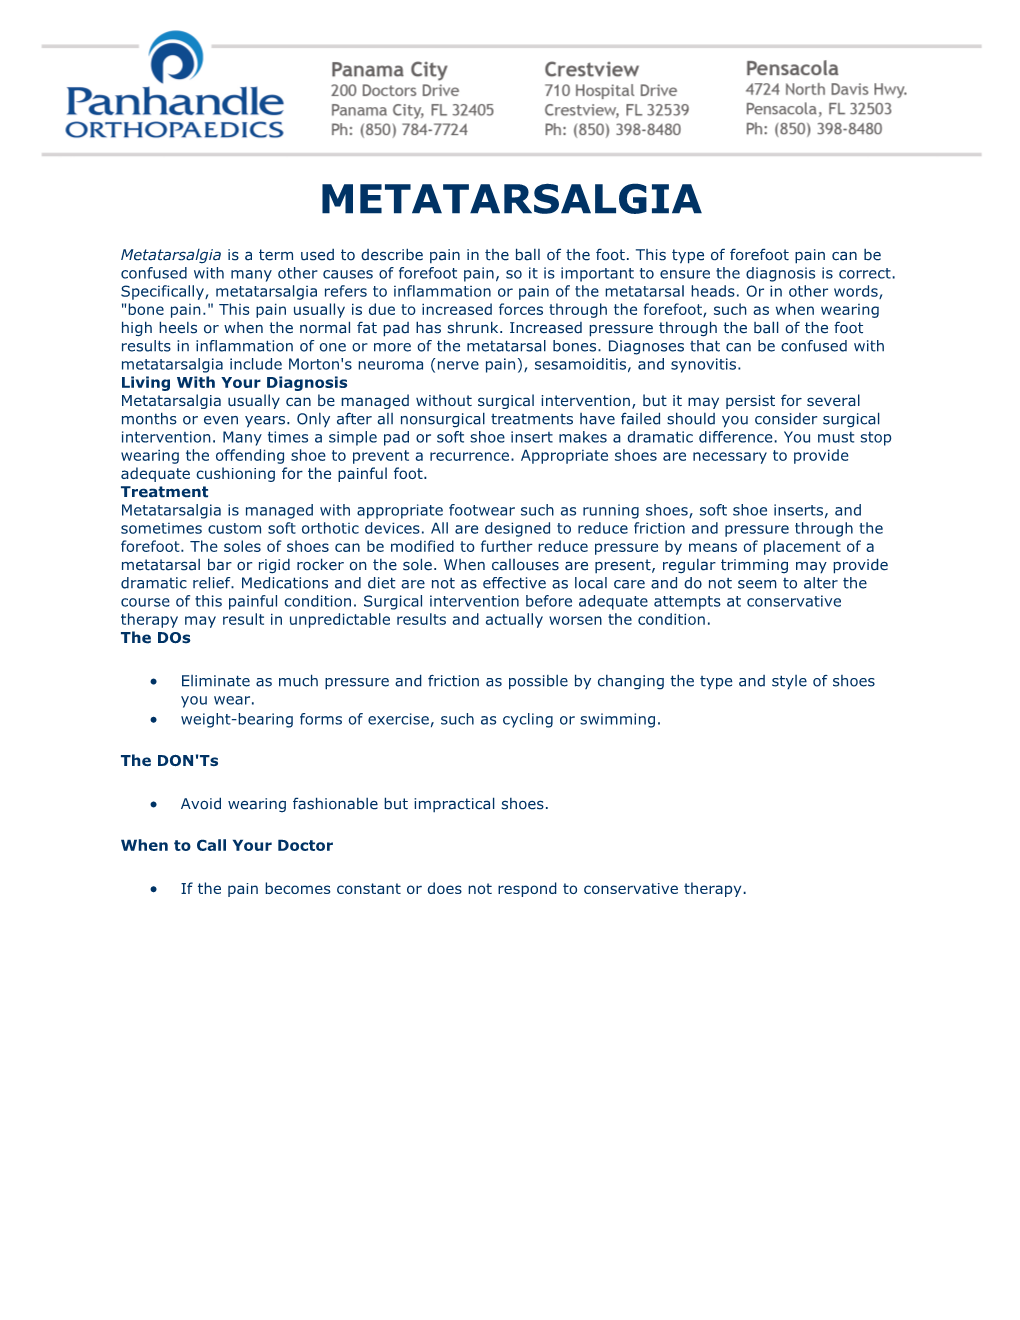 Metatarsalgia